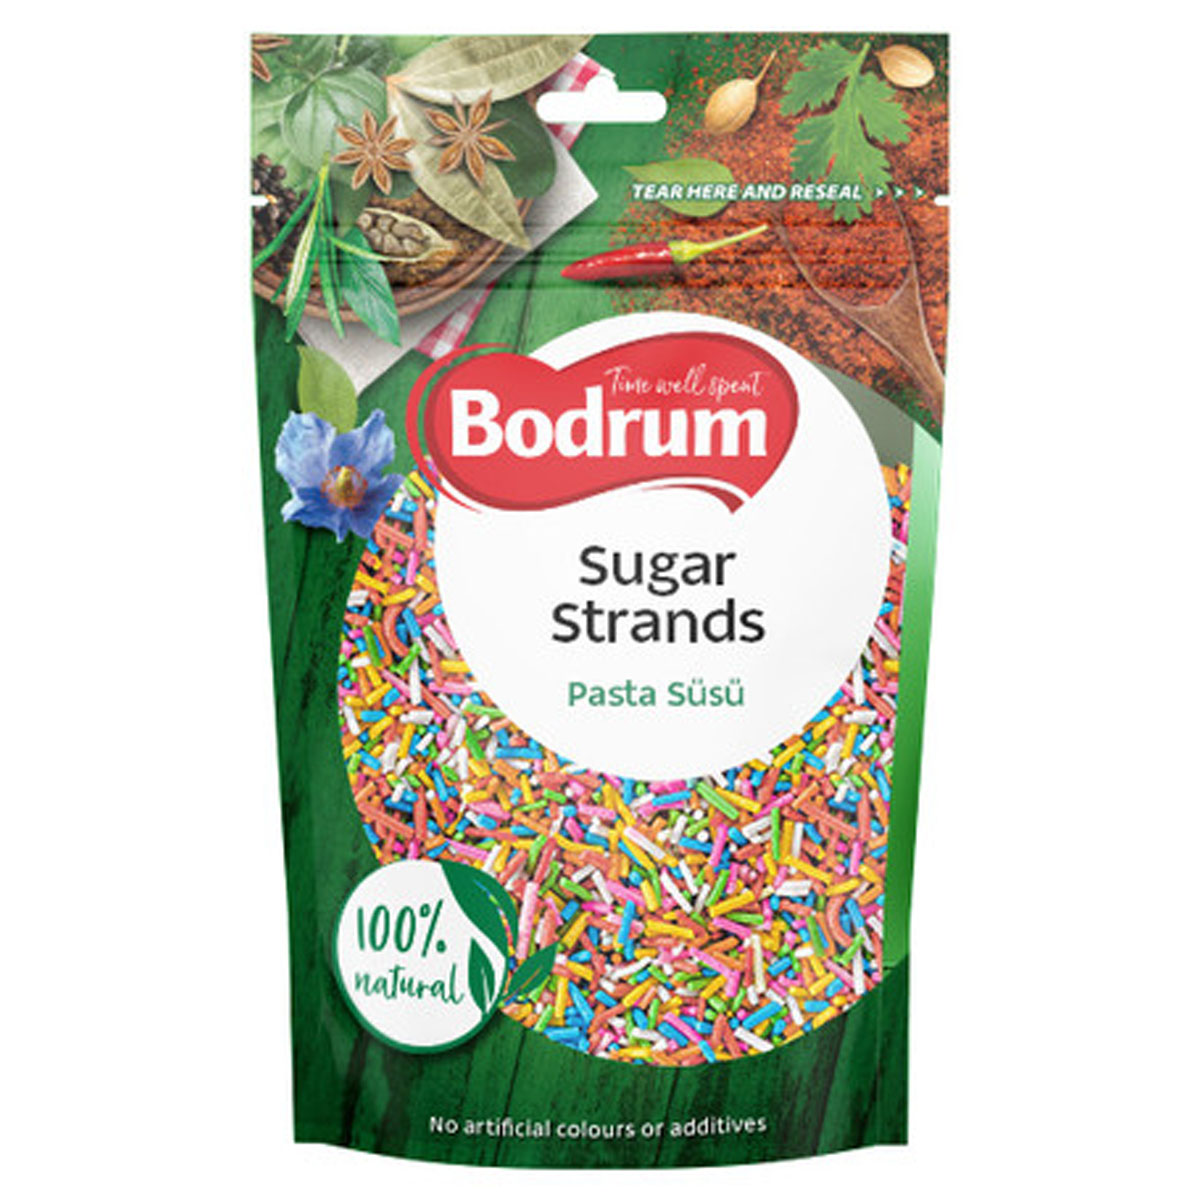 Bodrum - Sugar Strands - 60g pasta gold.